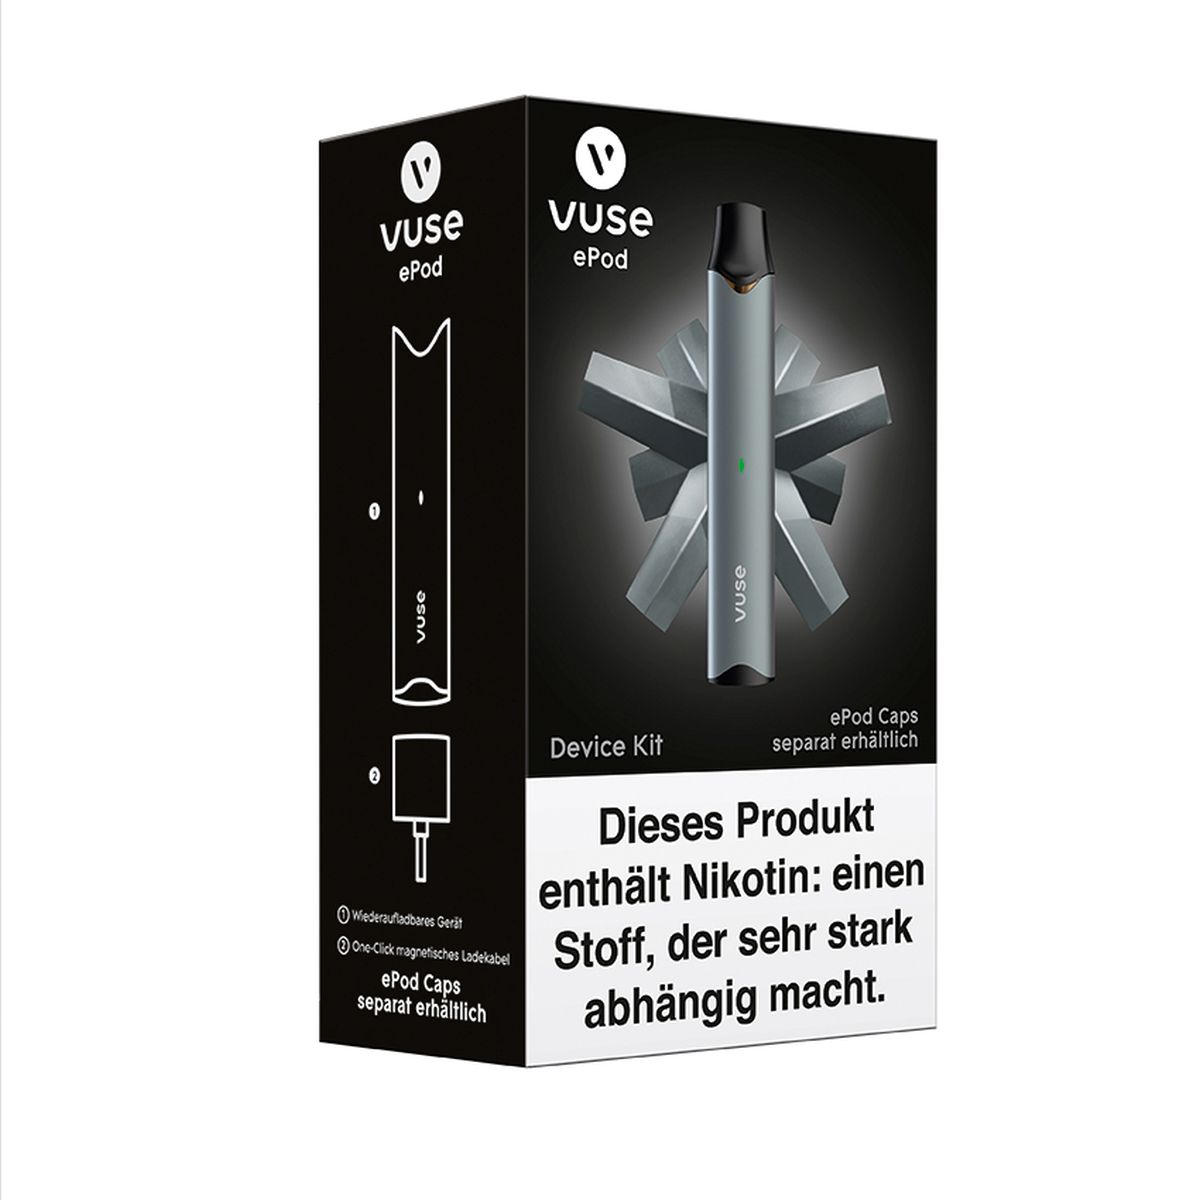 Vuse Vuse ePod Device Kit Anthrazit bei www.Tabakring.de kaufen